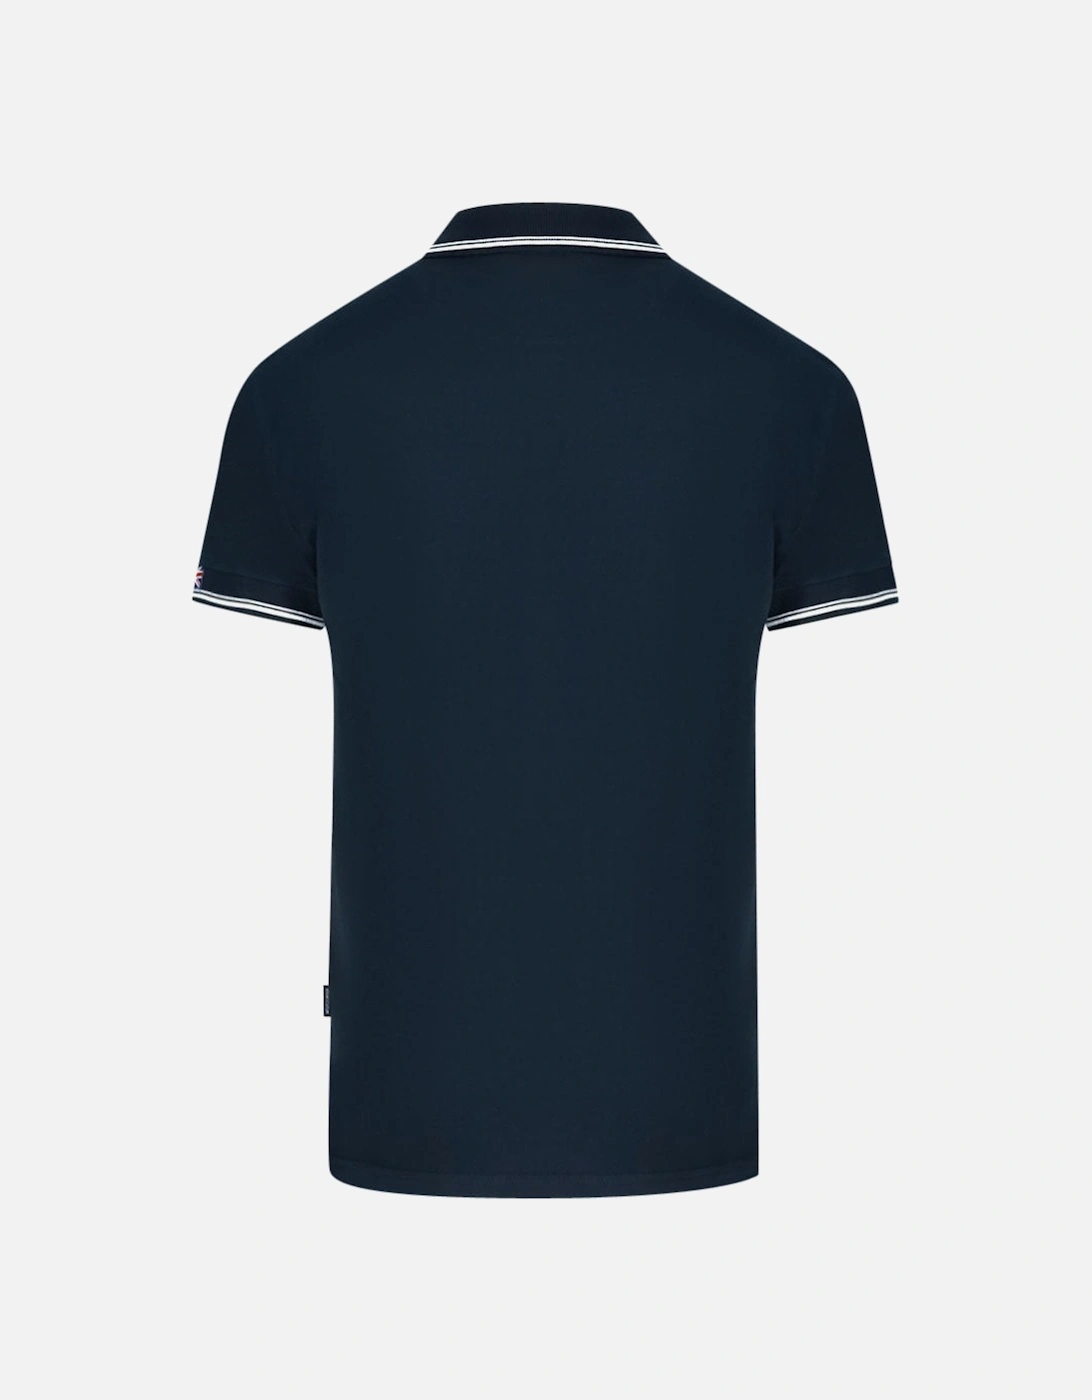 Aldis Tipped Navy Blue Polo Shirt